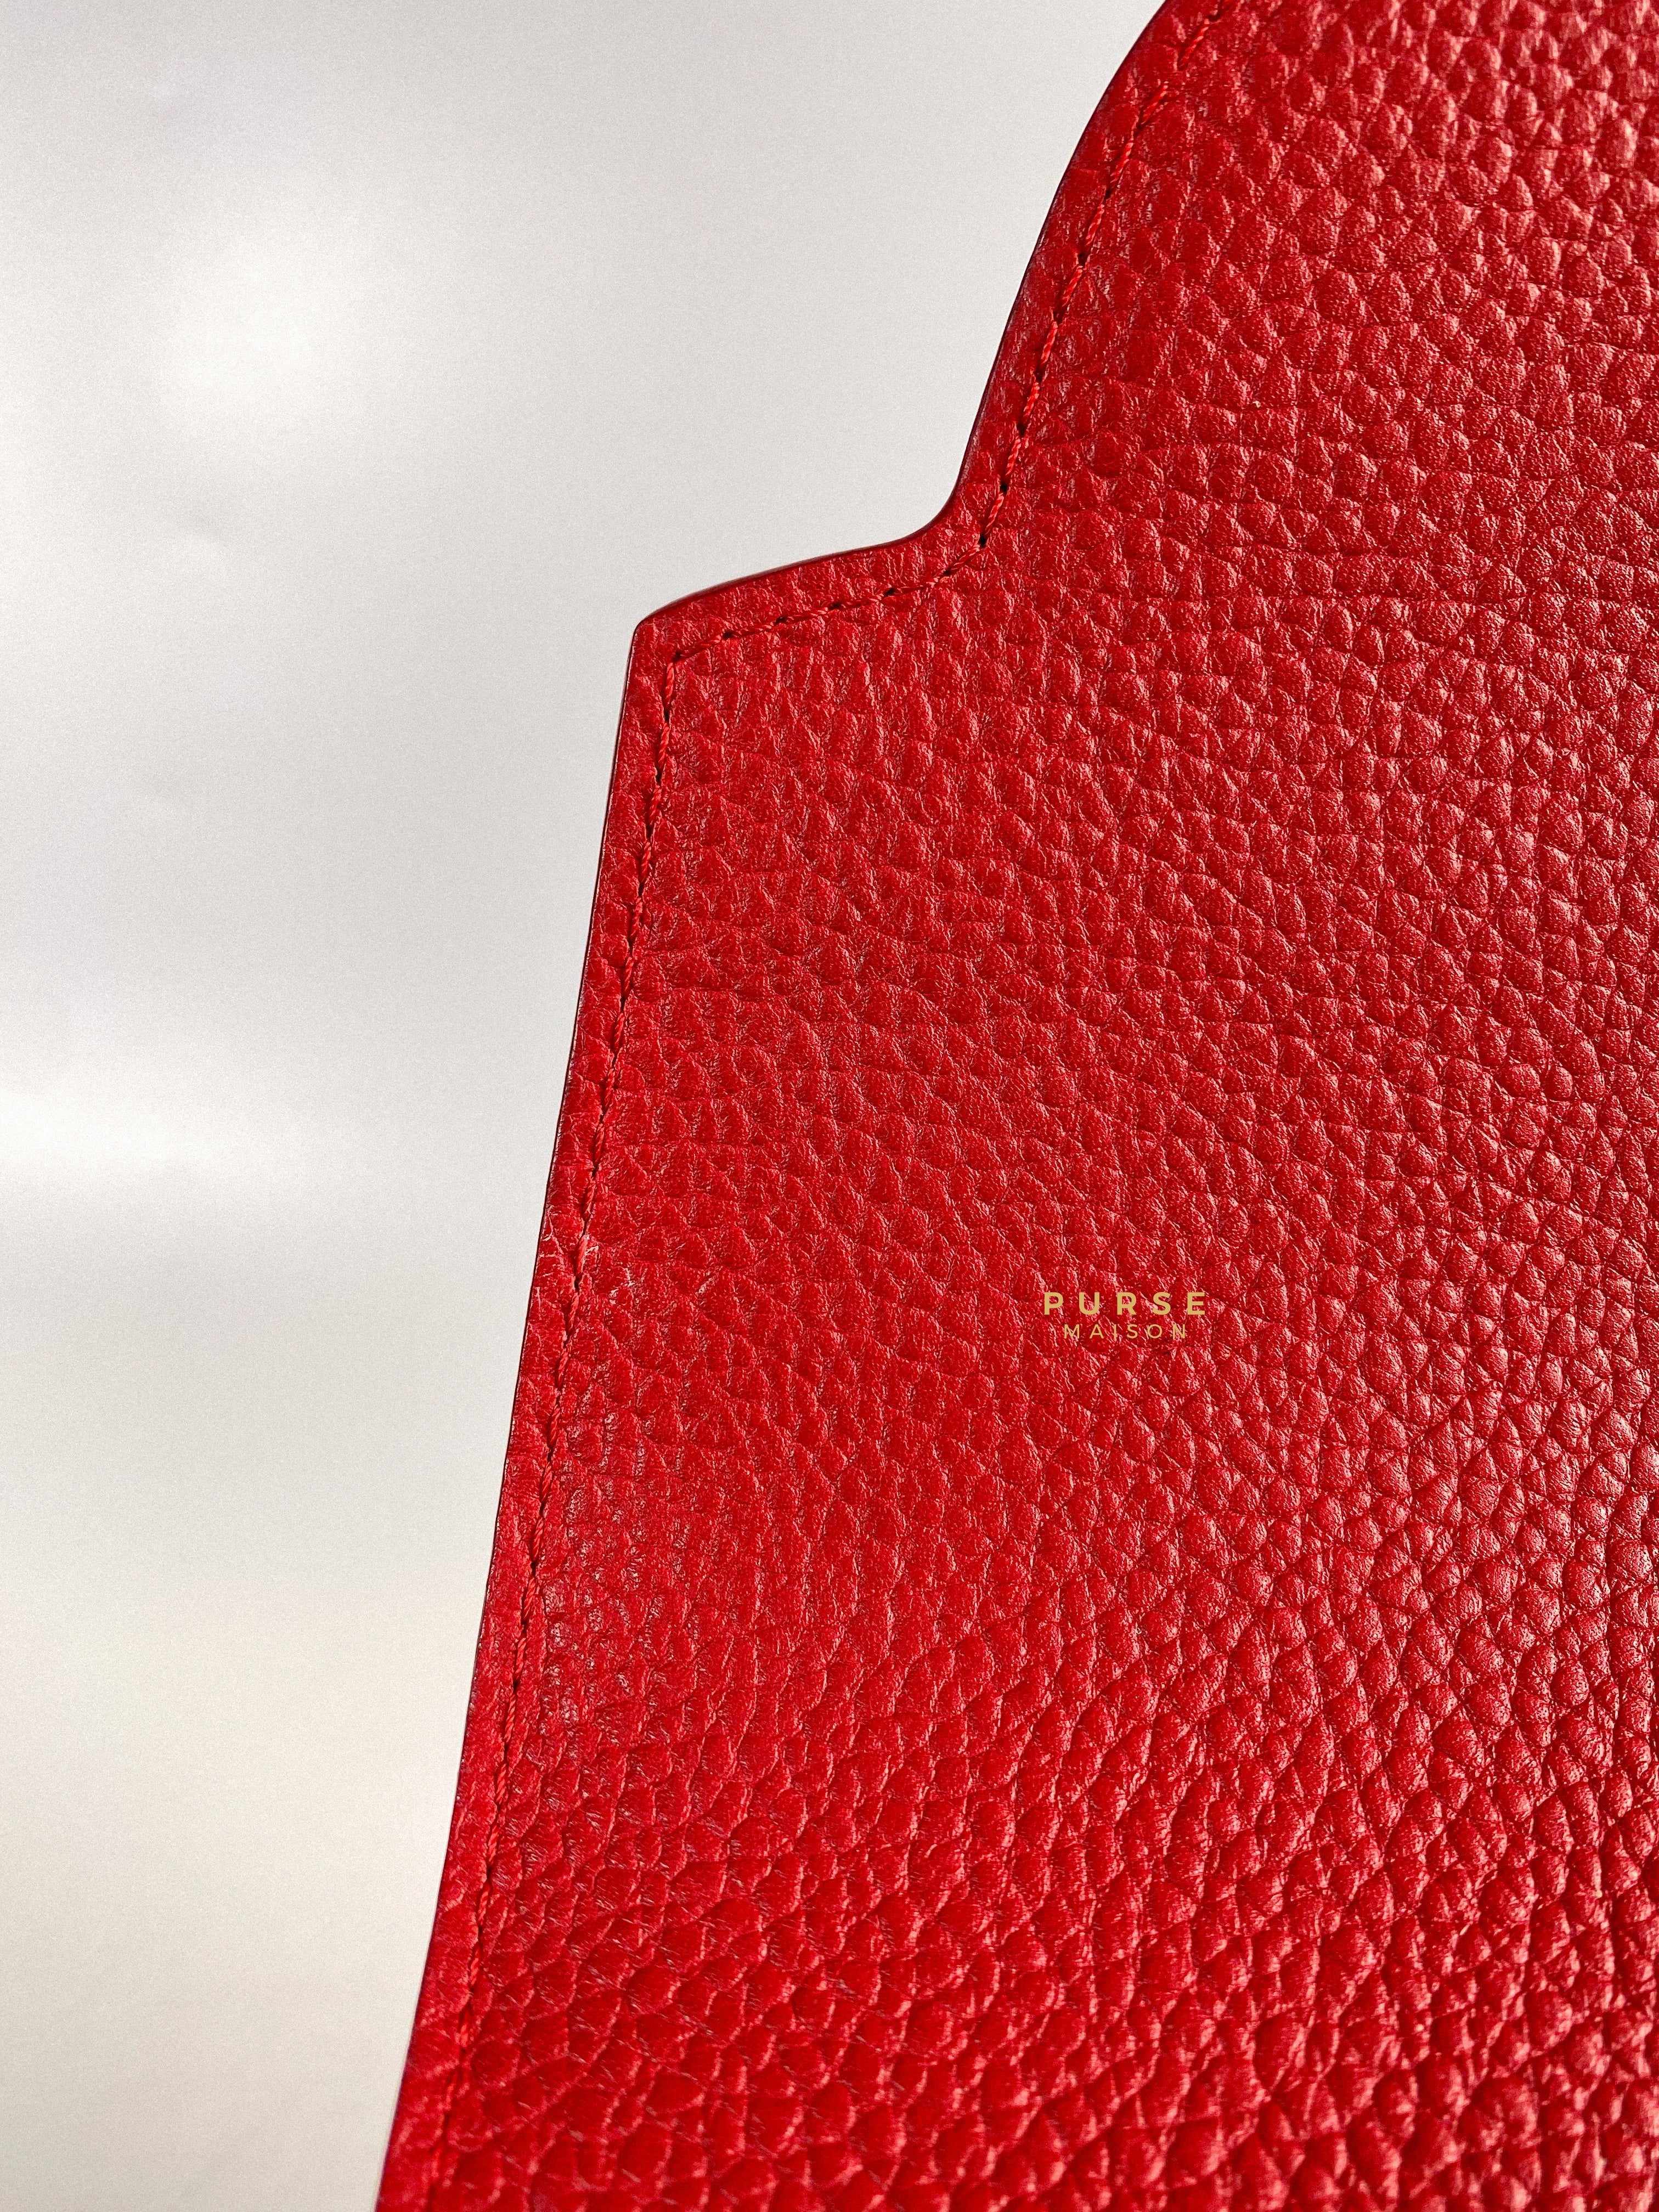 ORDER] Áo thun Louis Vuitton chữ Louis Vuitton đỏ